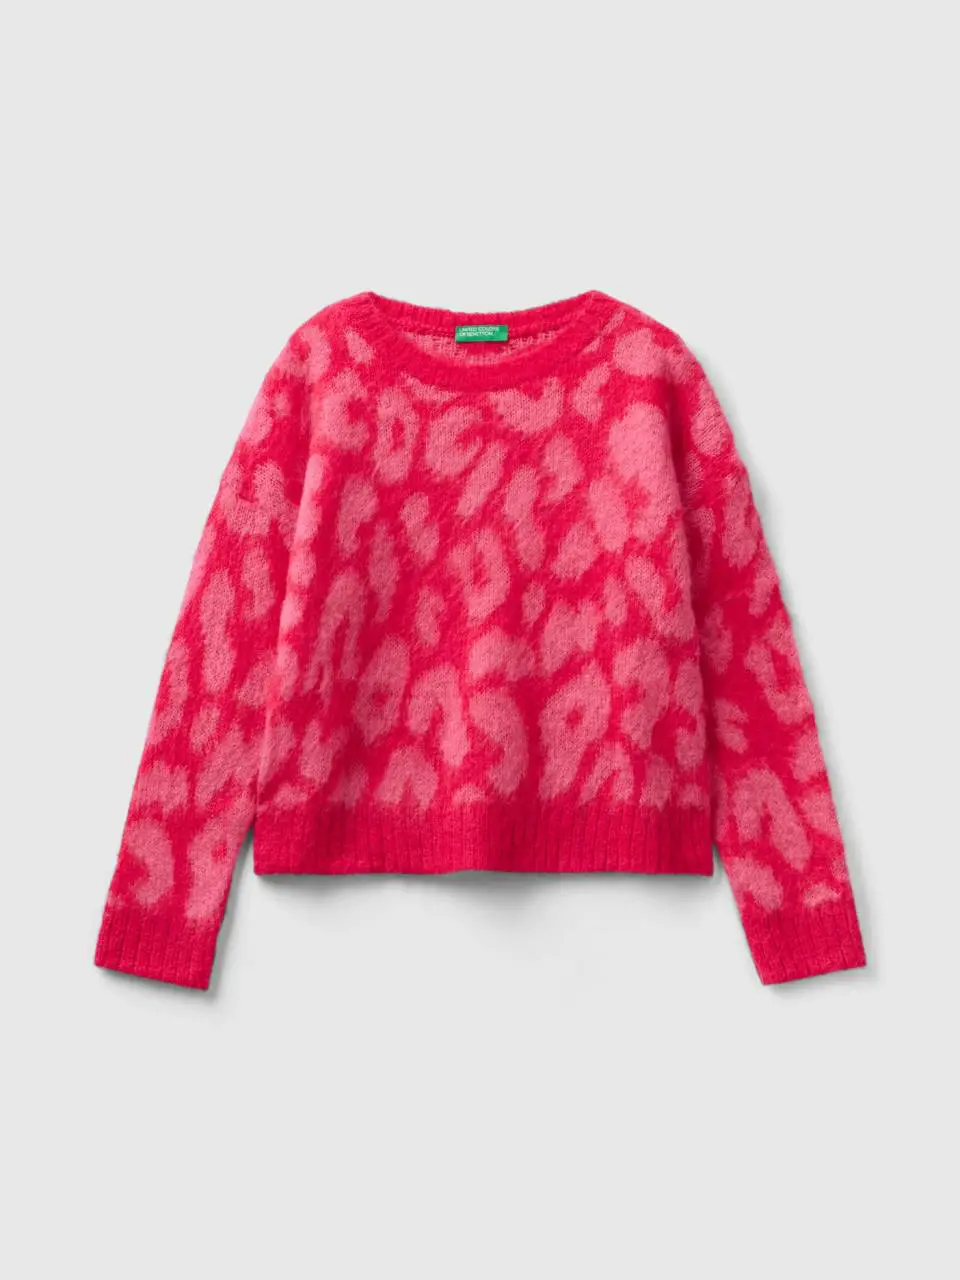 Benetton animal print sweater in wool blend. 1